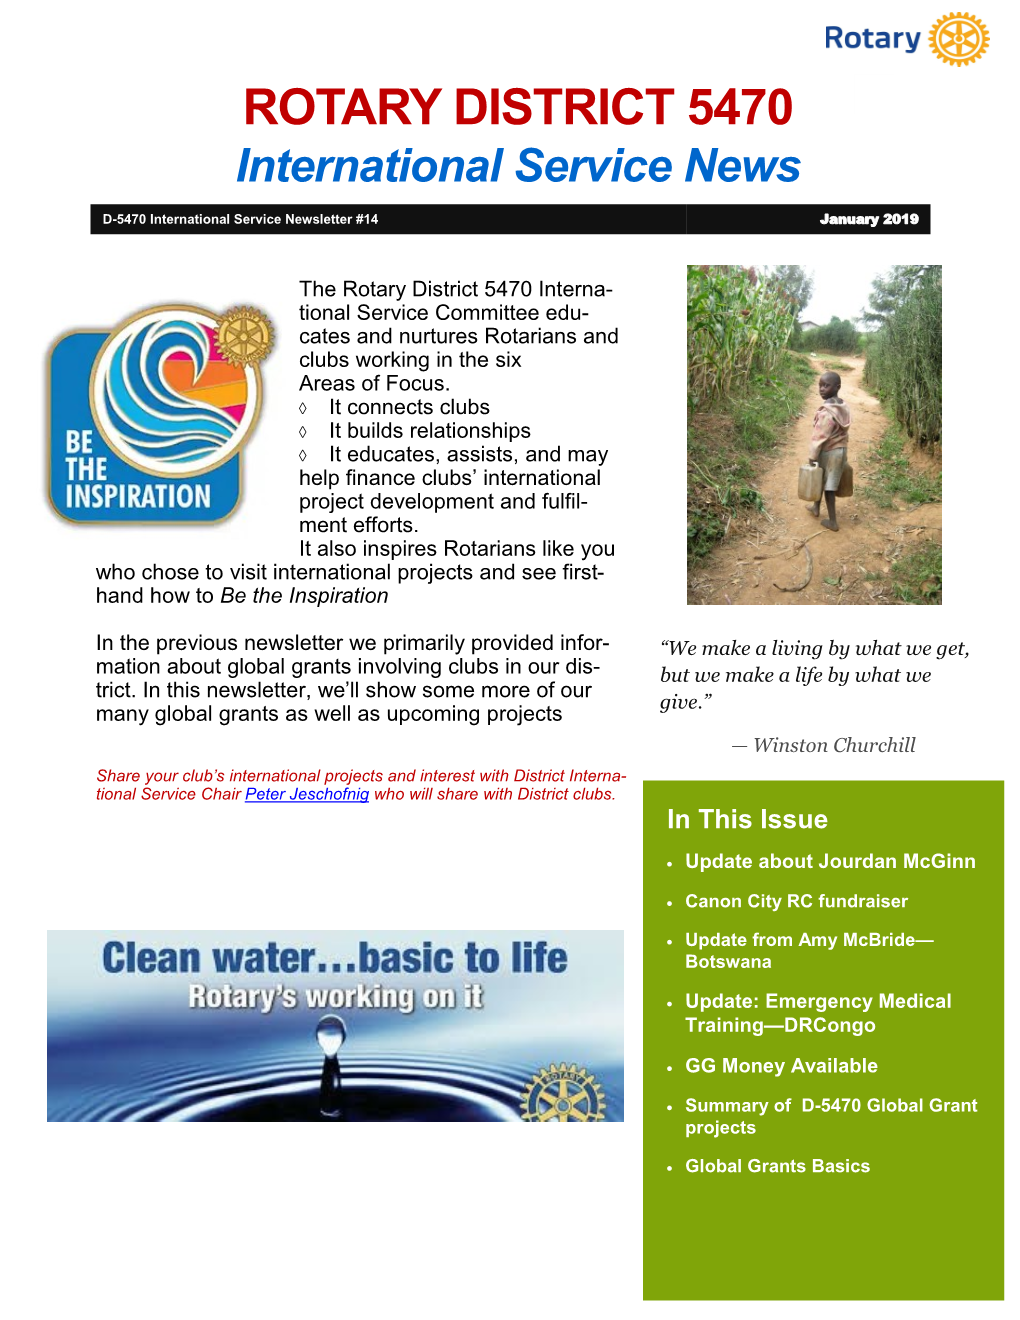 ROTARY DISTRICT 5470 International Service News